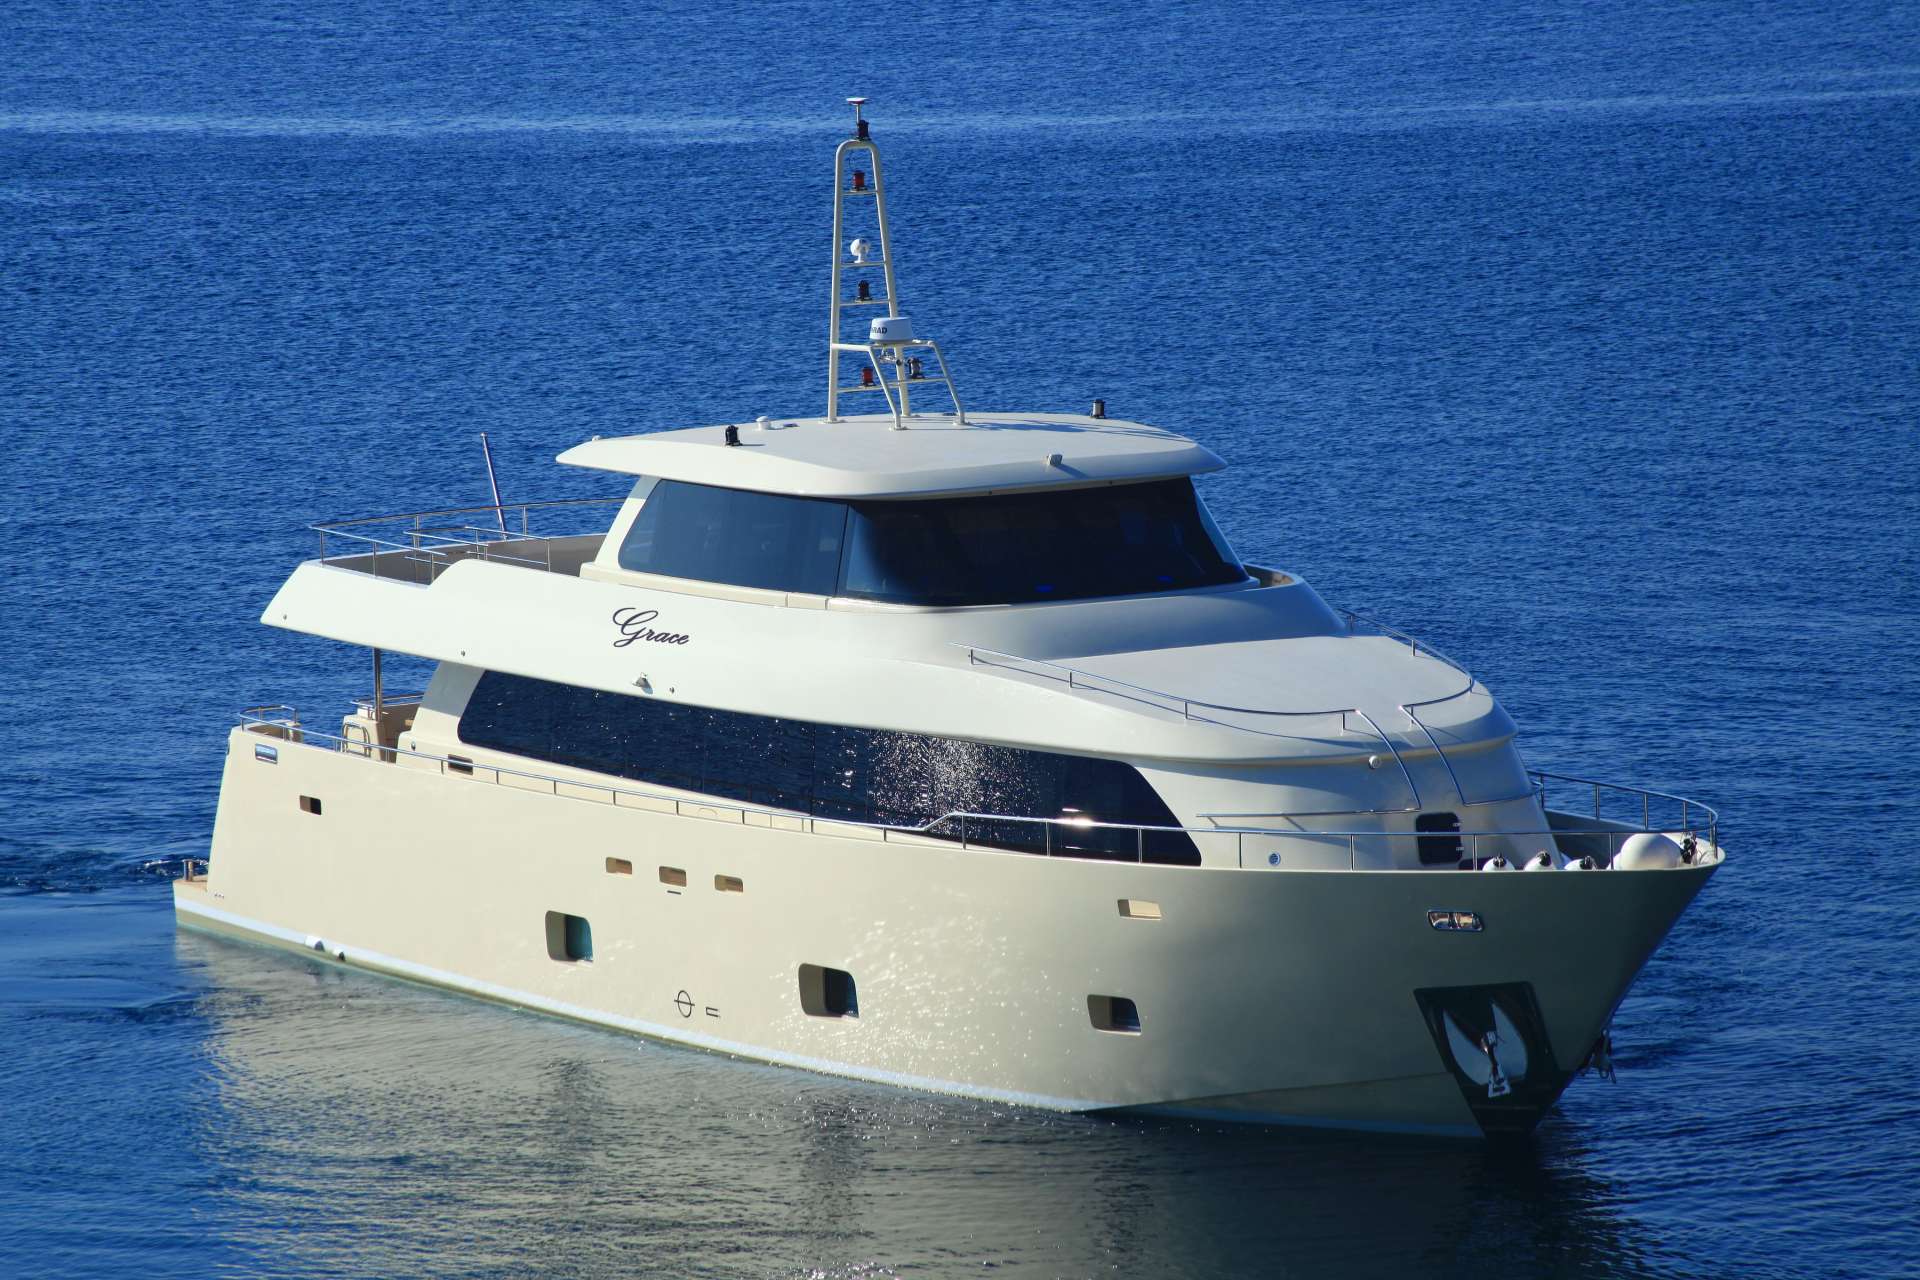 Motor Yacht 'GRACE', 10 PAX, 5 Crew, 91.00 Ft, 28.00 Meters, Built 2013, Aegean Build